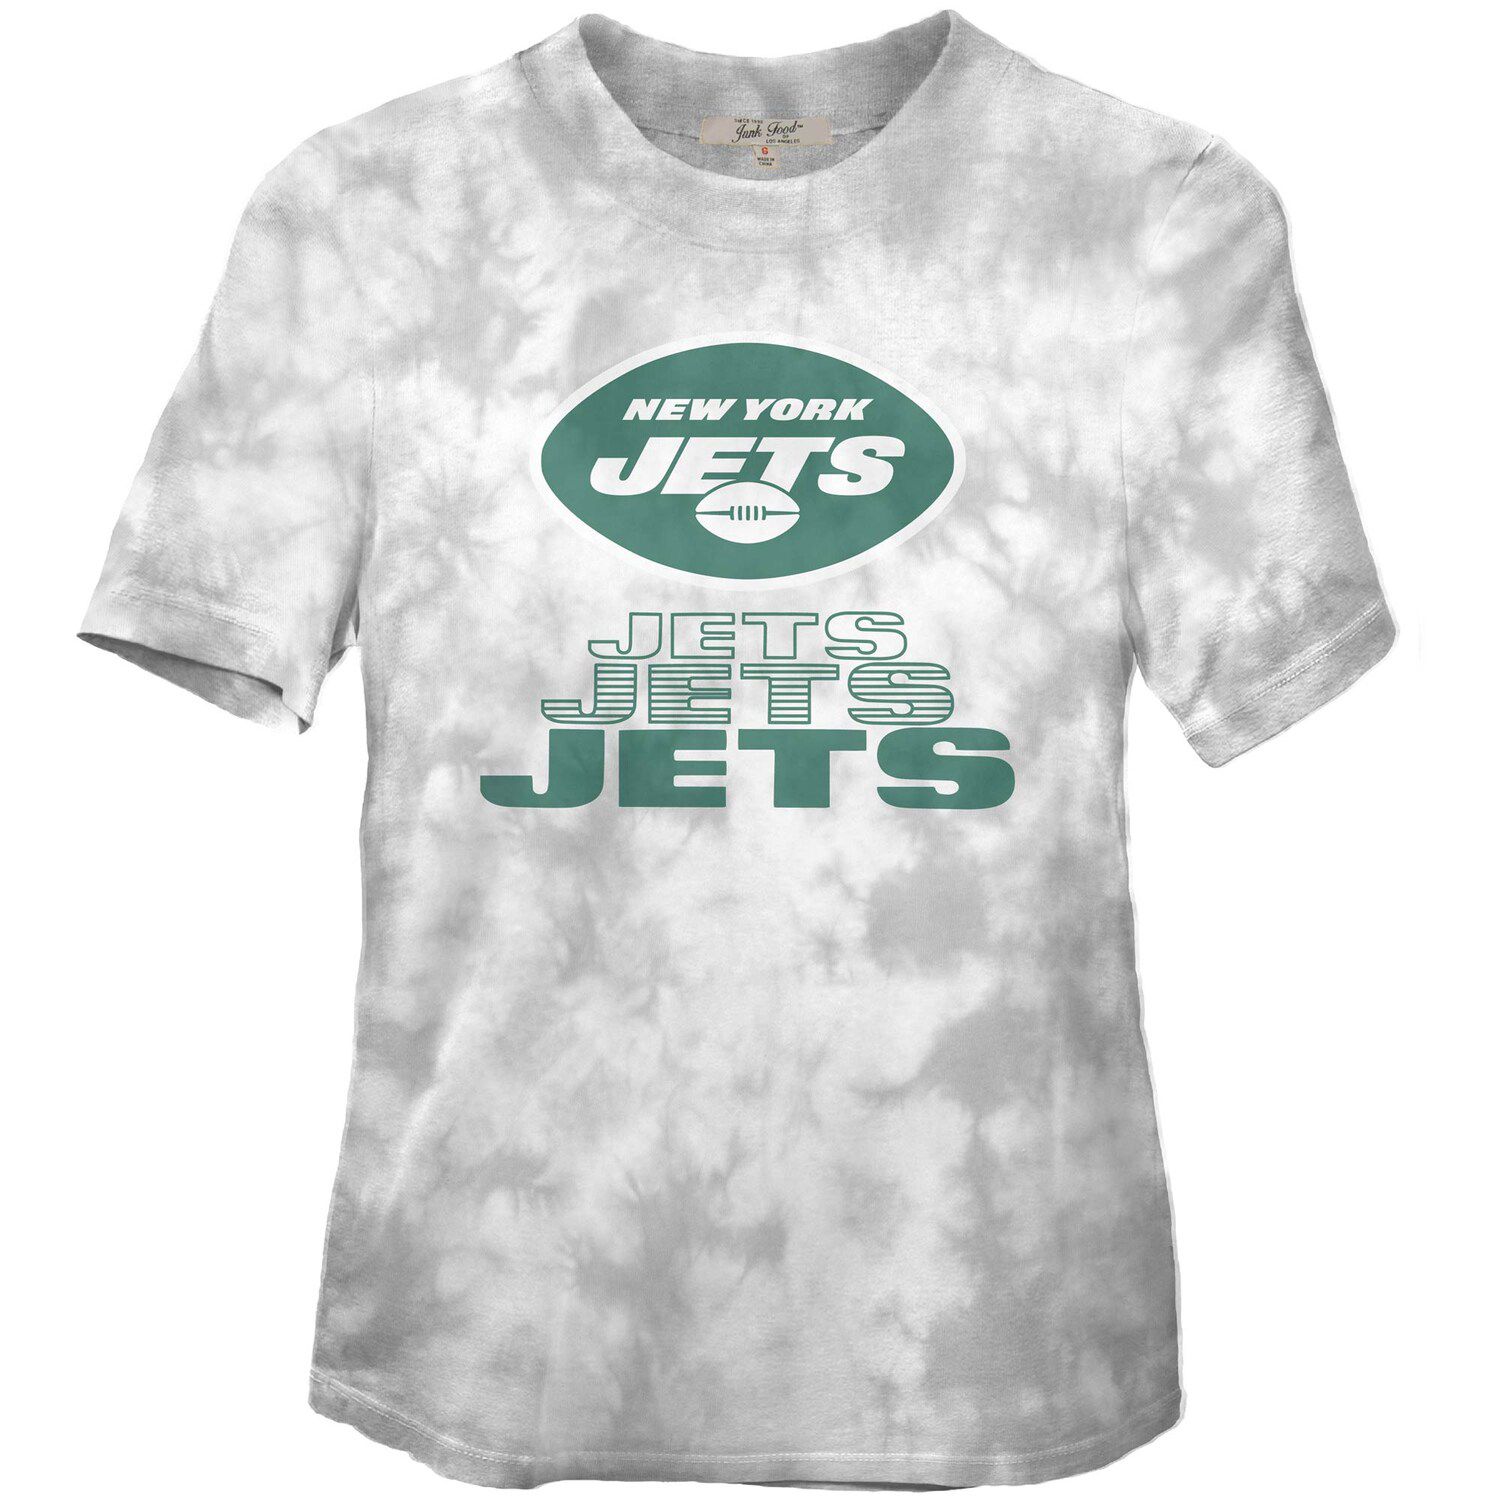 Image for Unbranded Women's Junk Food Black New York Jets Team Spirit Tie-Dye T-Shirt at Kohl's.